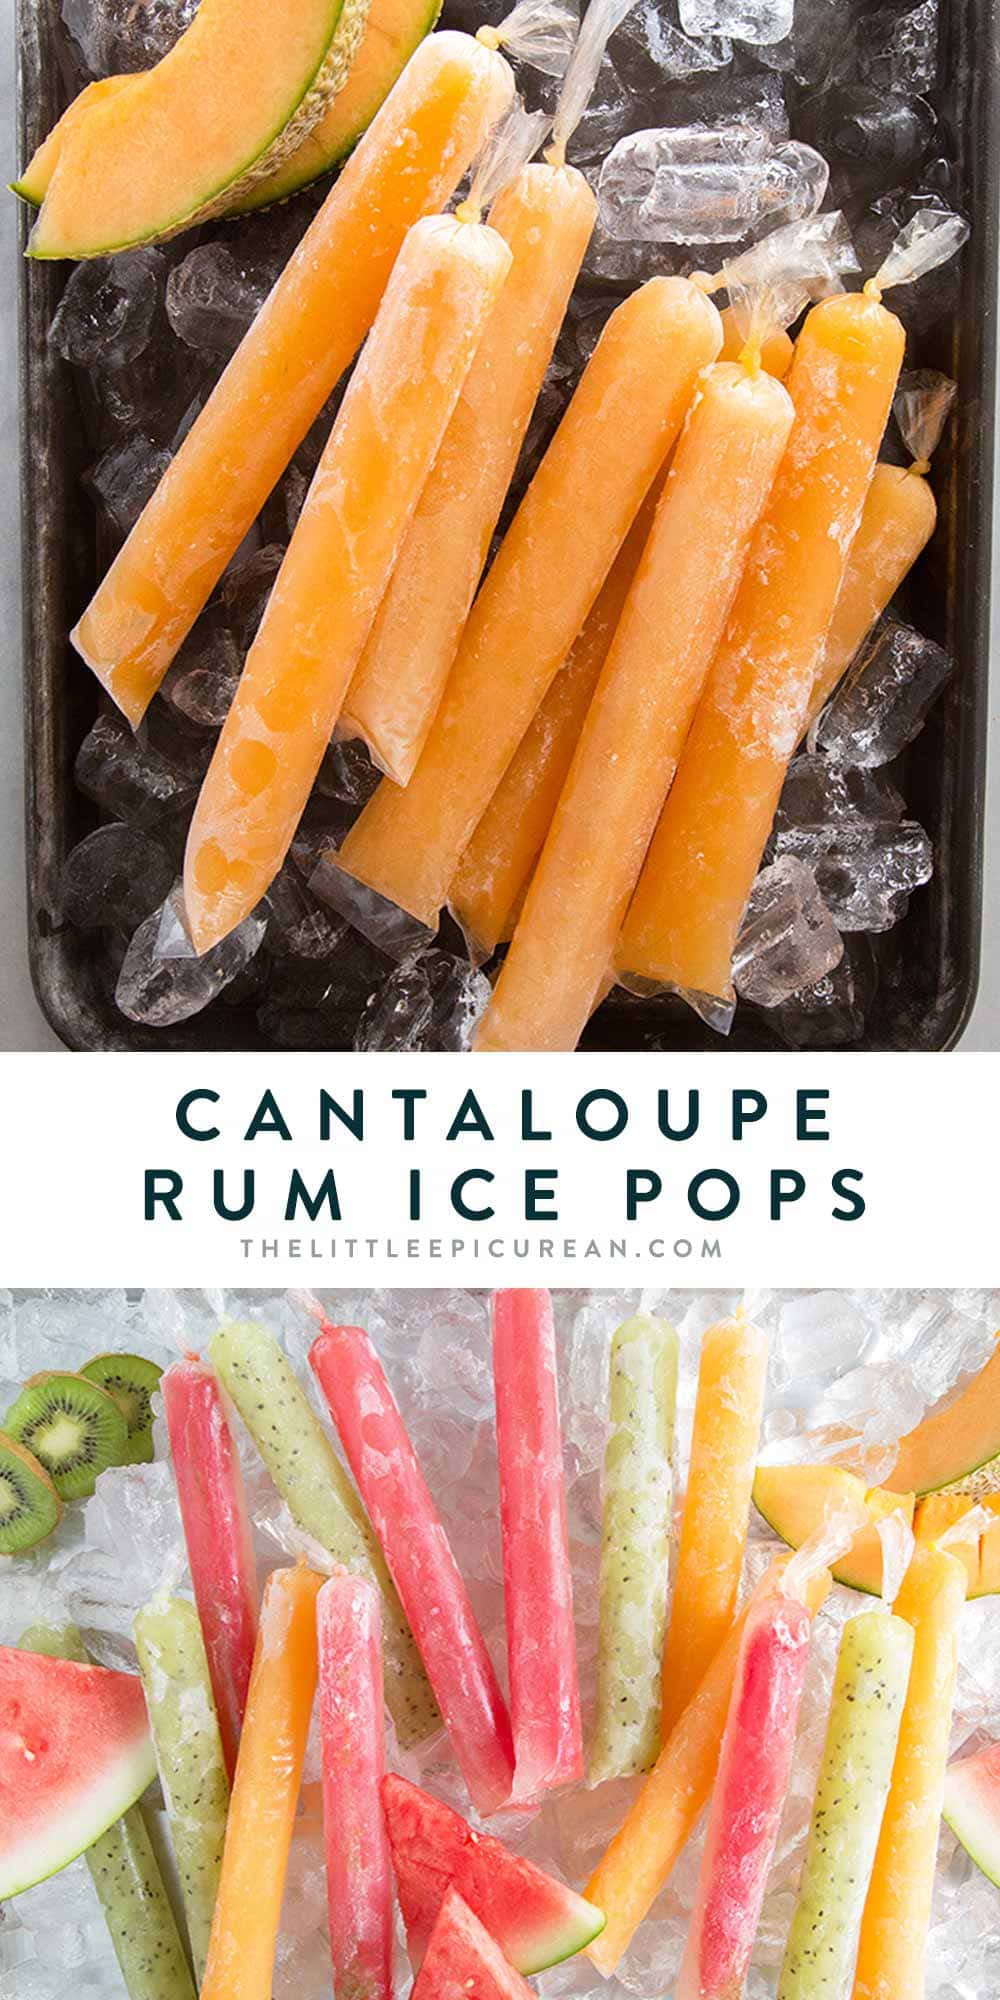 Cantaloupe rum ice pops